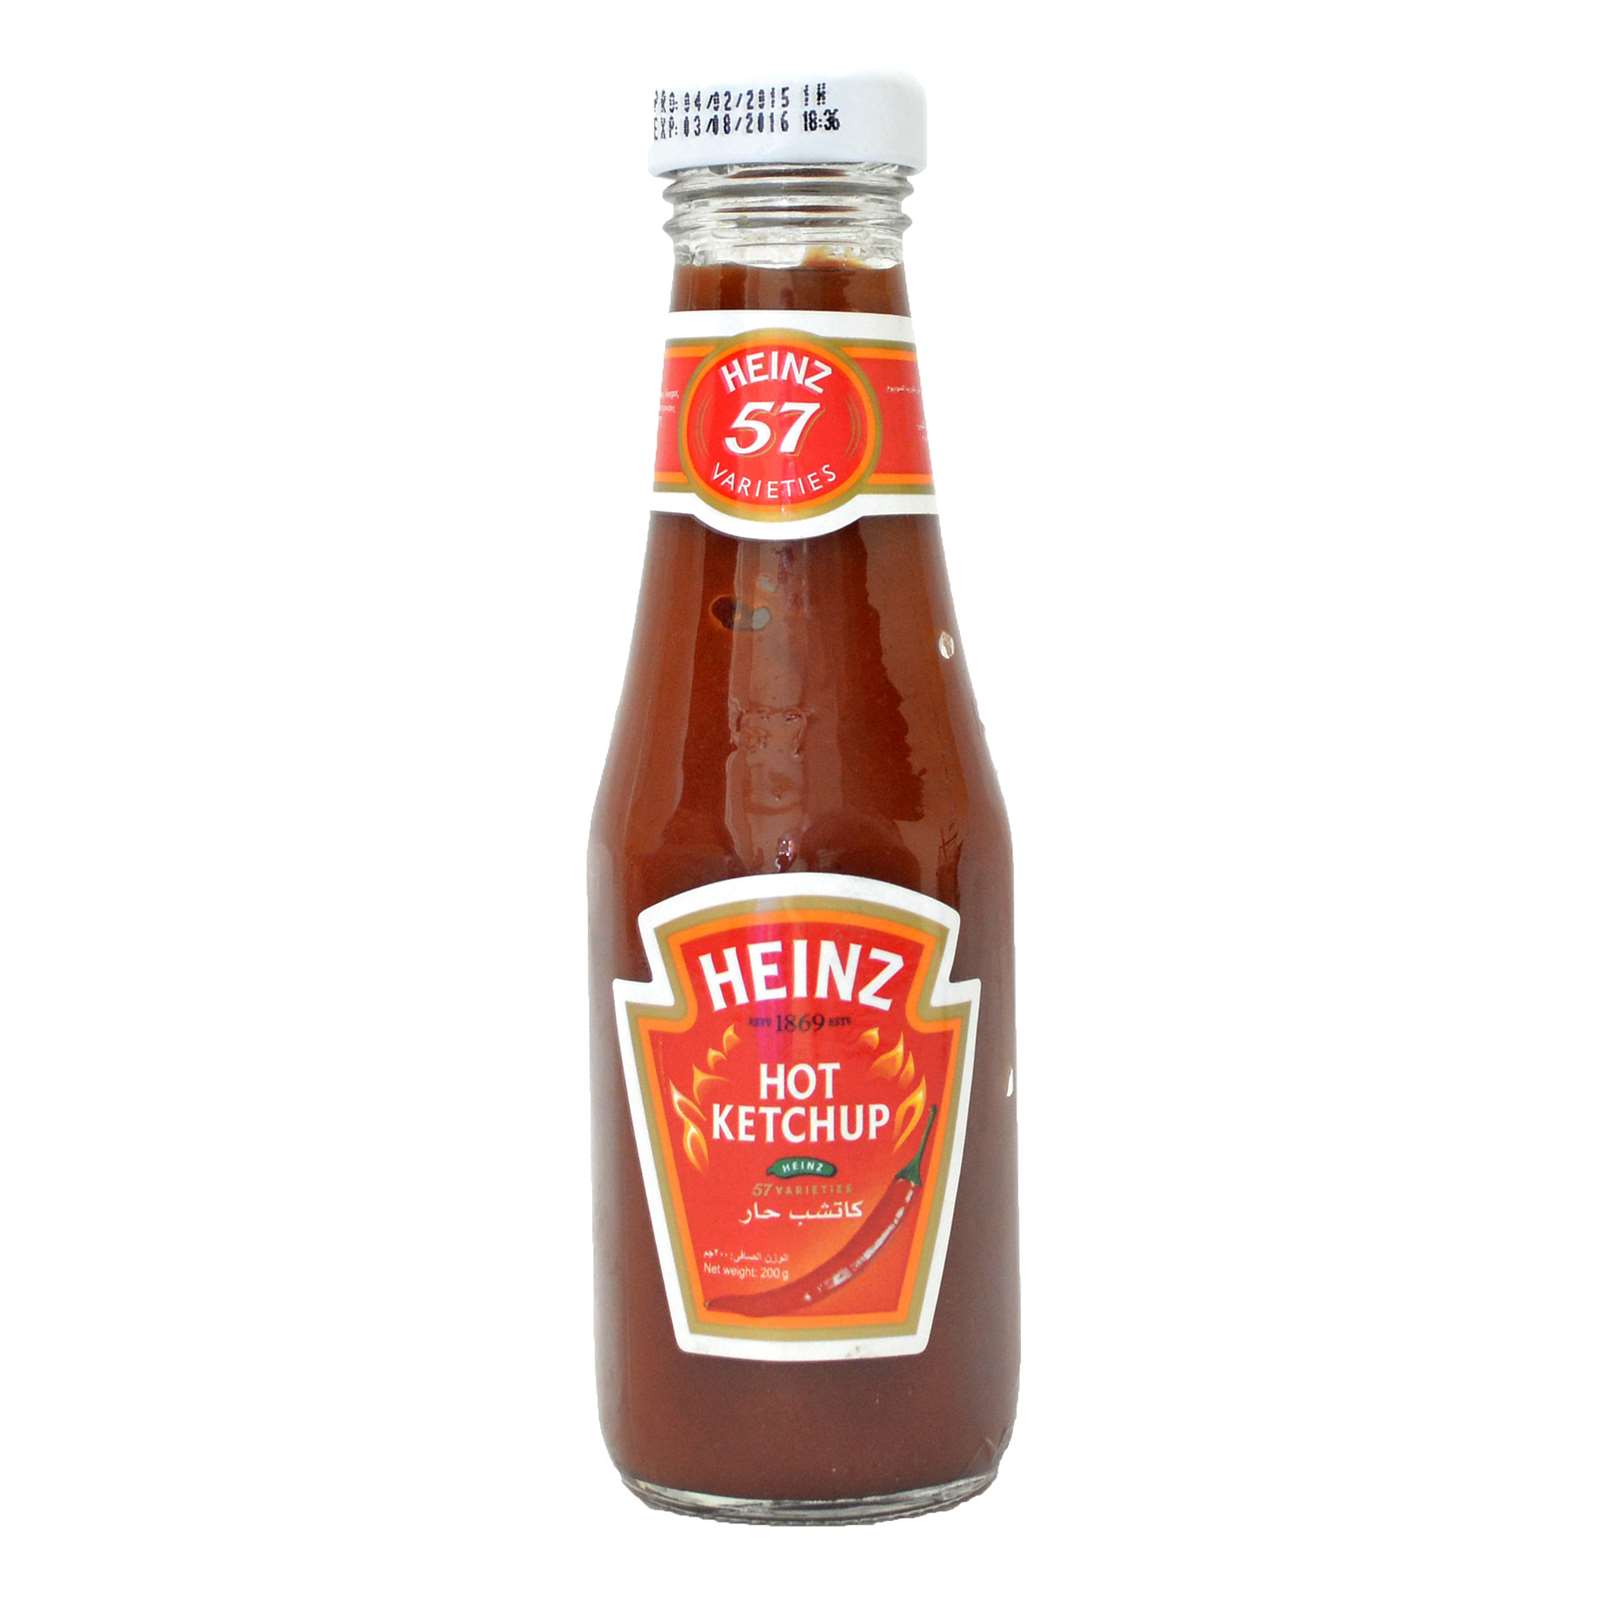 Hot ketchup, Heinz